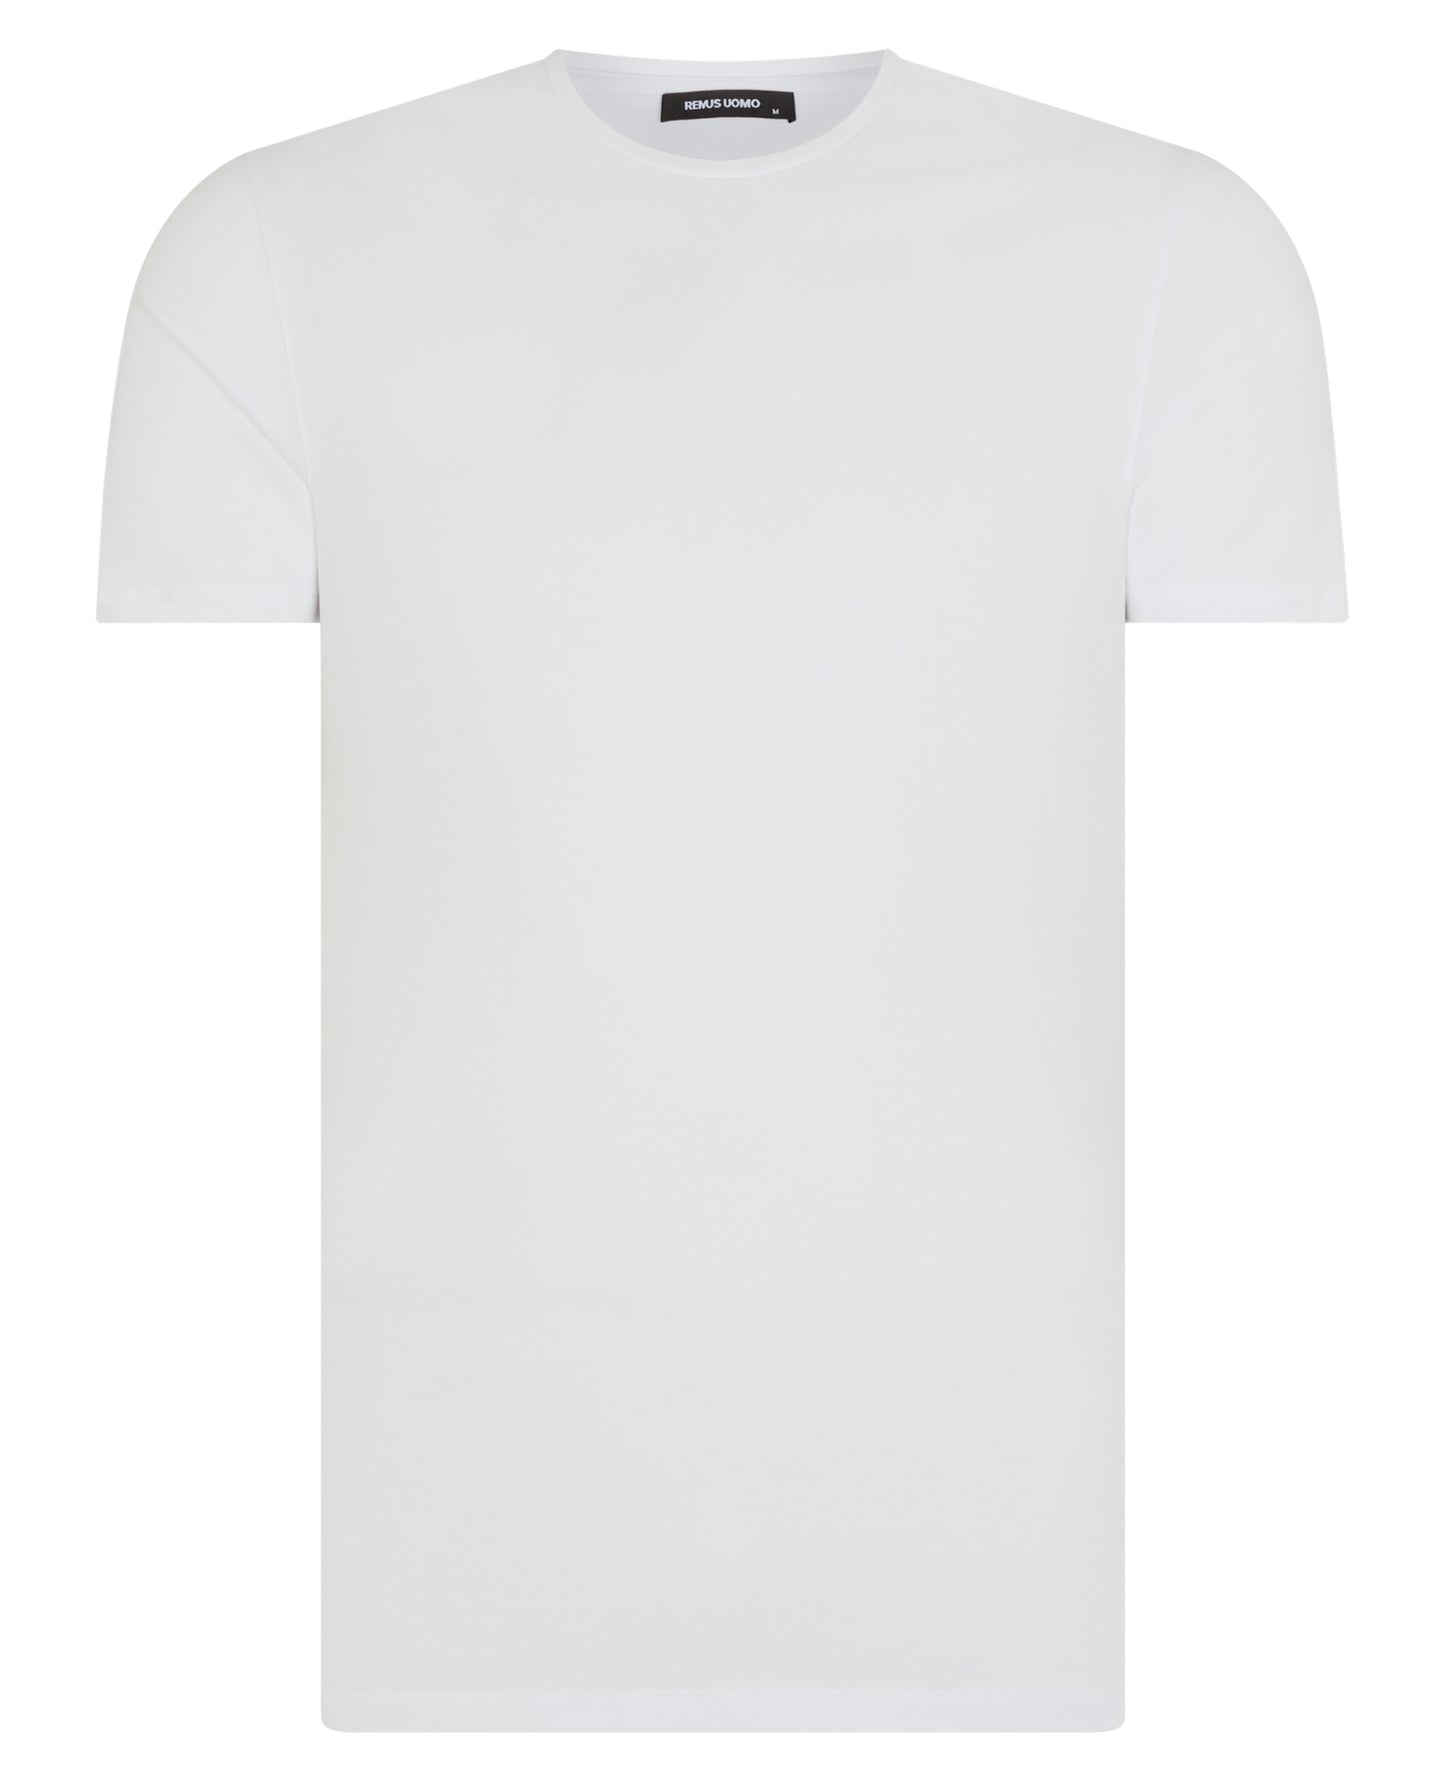 Remus Uomo Tapered Fit White Cotton T-Shirt